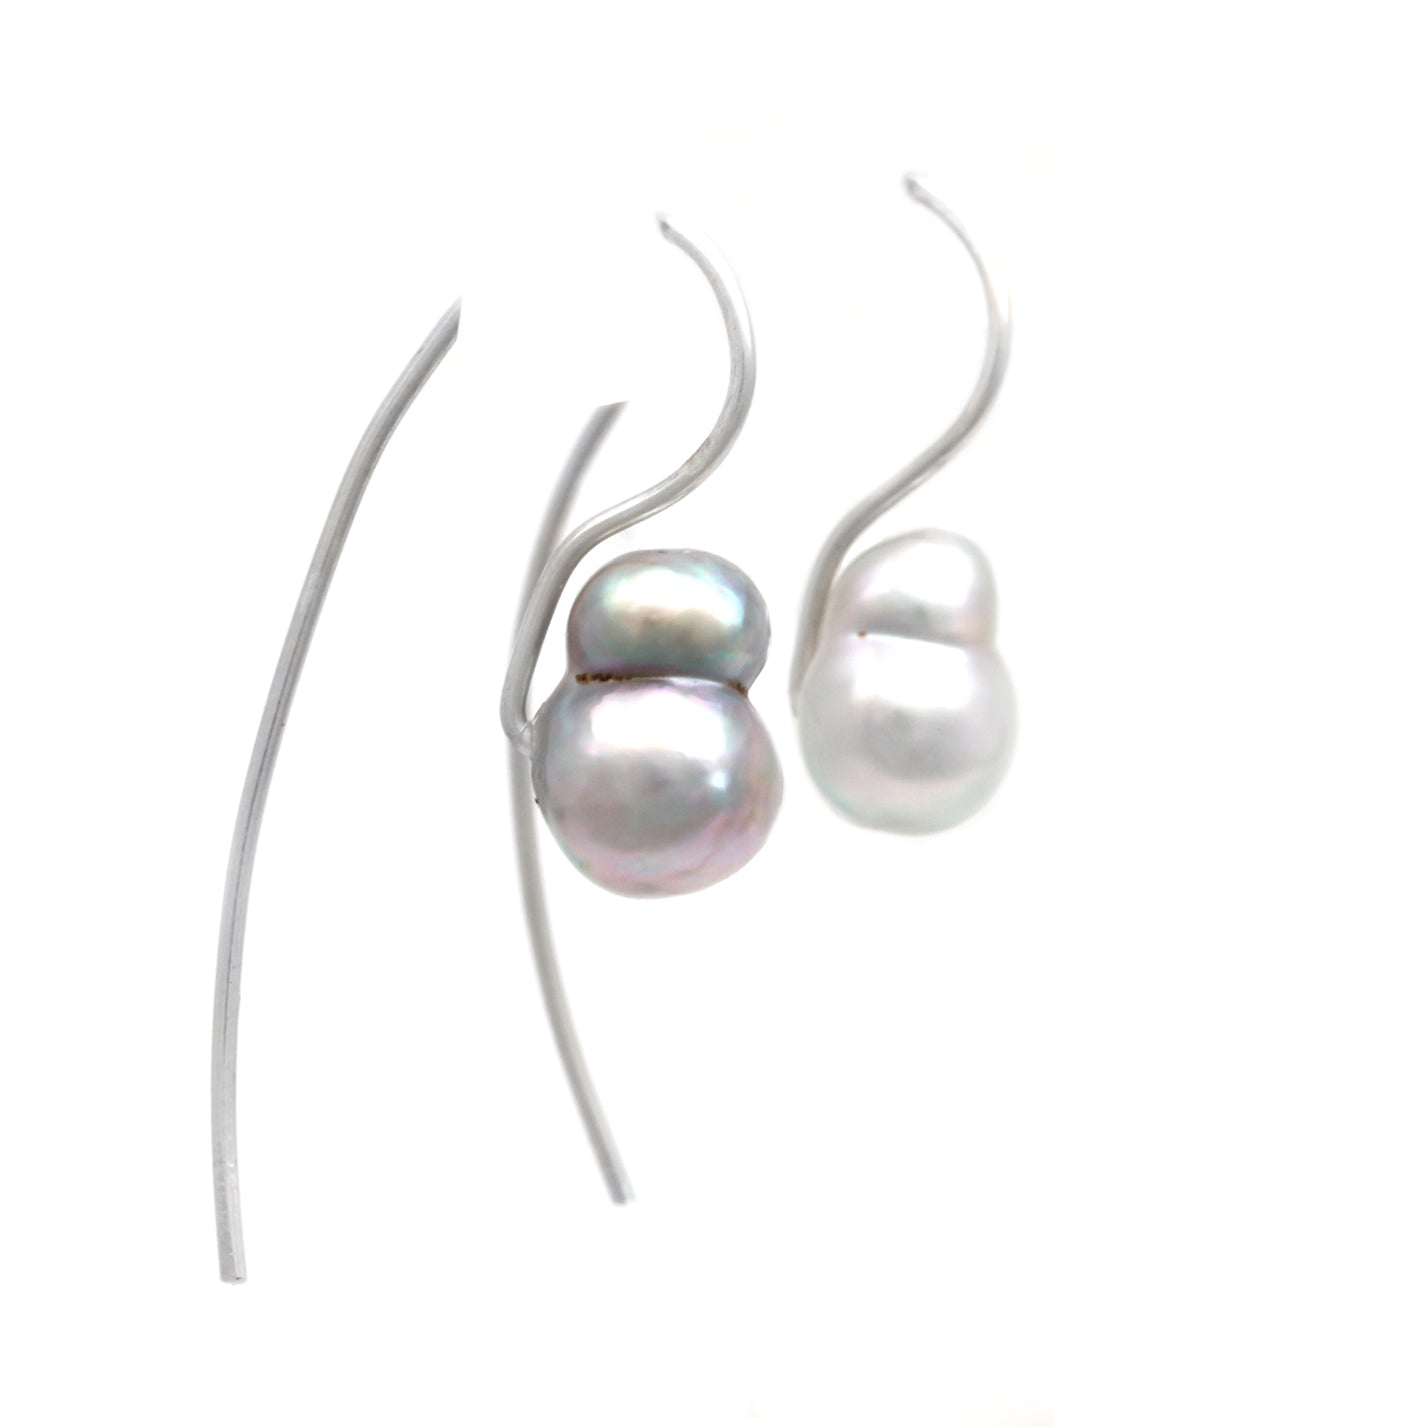 Impressive Baroque Pearls on Silver Earrings